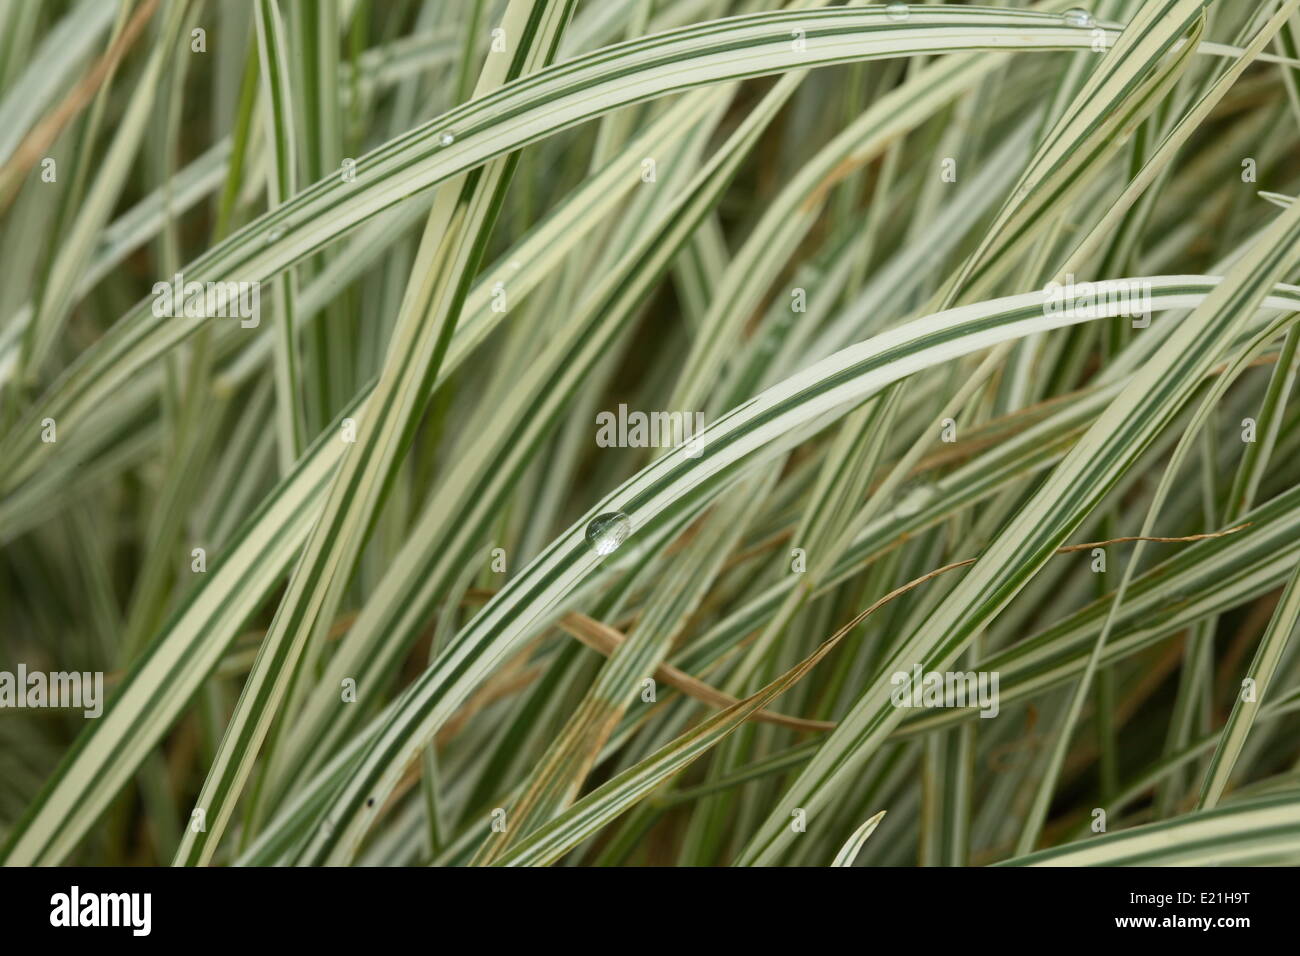 Bulbous oat grass 'Variegatum' Stock Photo